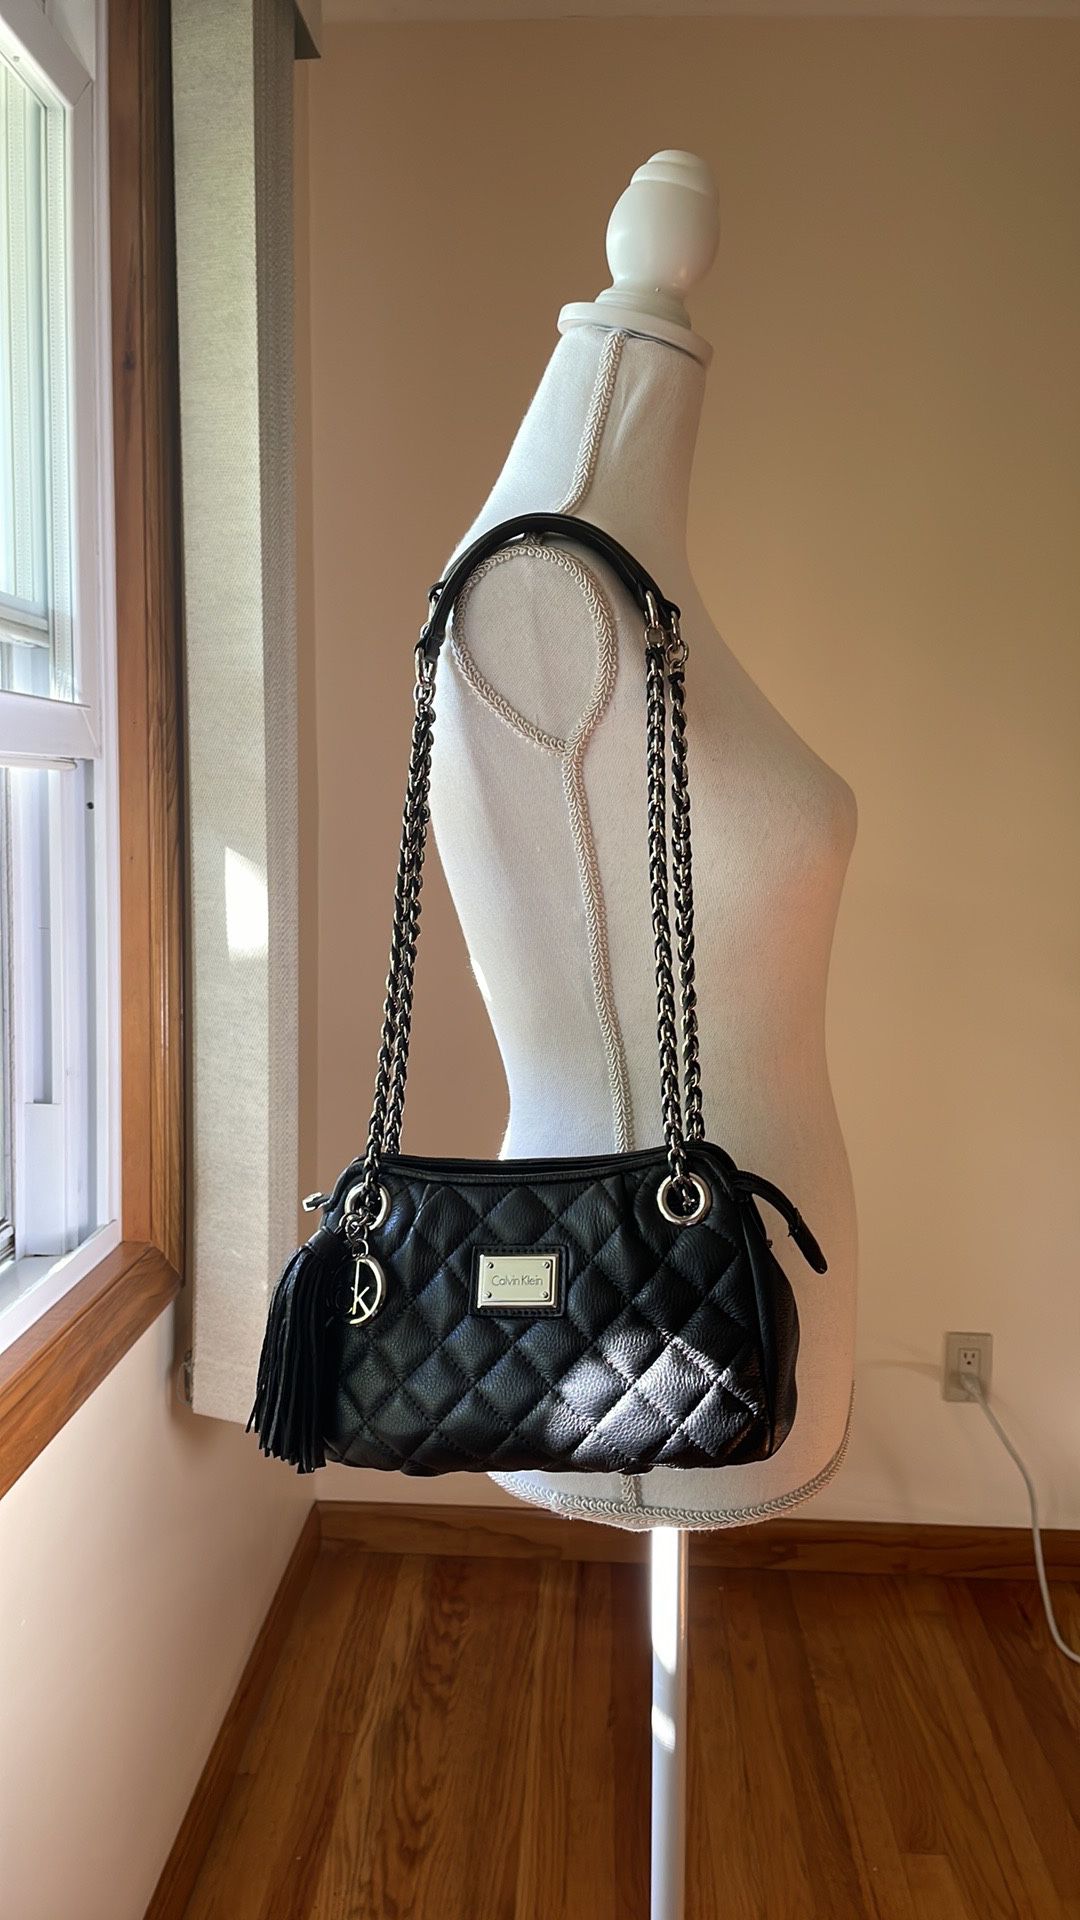 Crossbody Bags / Crossbody Purses from Calvin Klein for Women in Brown